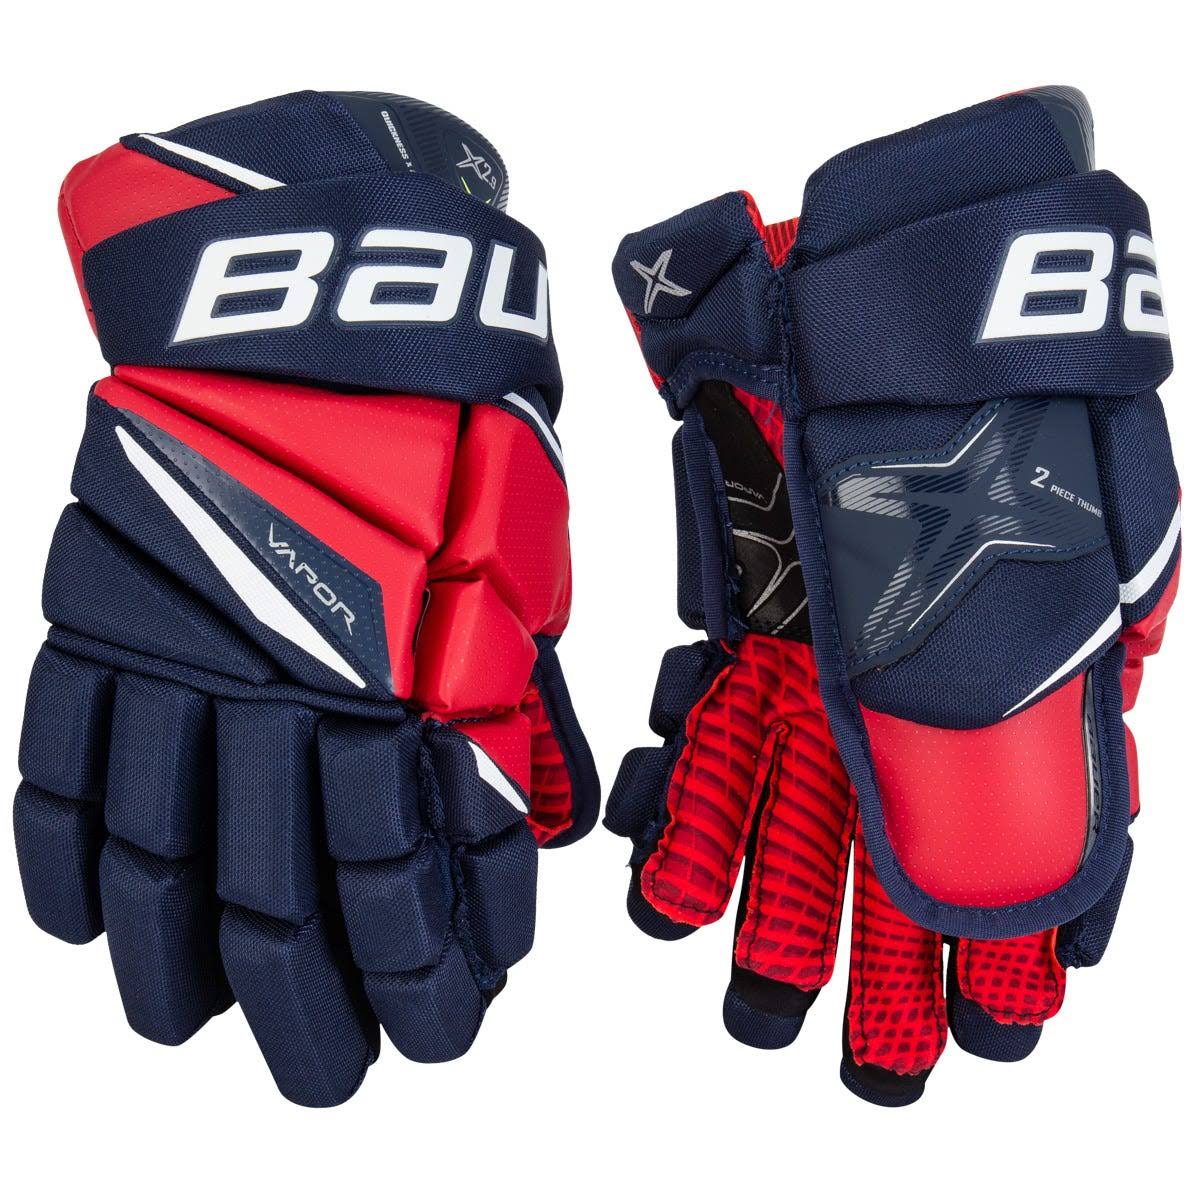 Bauer Vapor X2.9 Hockey Gloves - Senior - Navy/Red/White - 13.0"